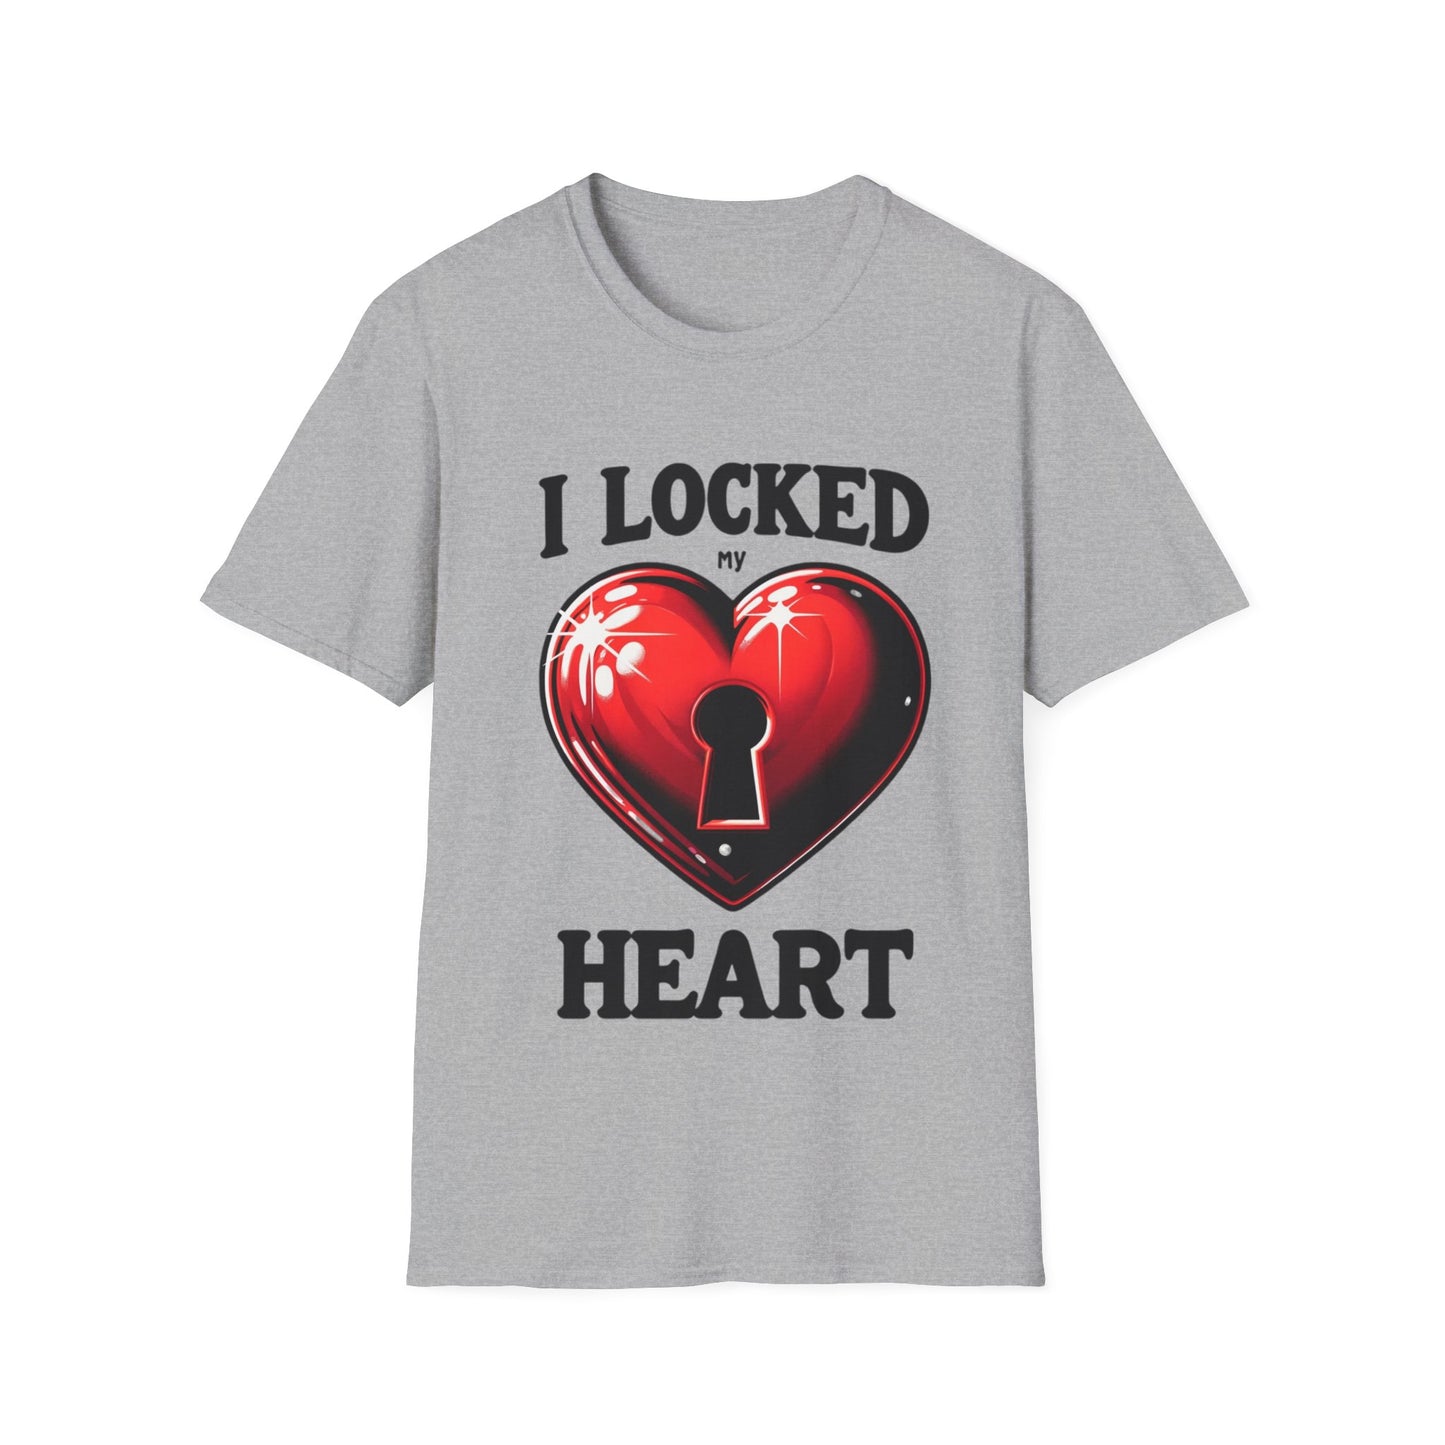 I Locked My Heart | Deluxe Unisex Tee colors